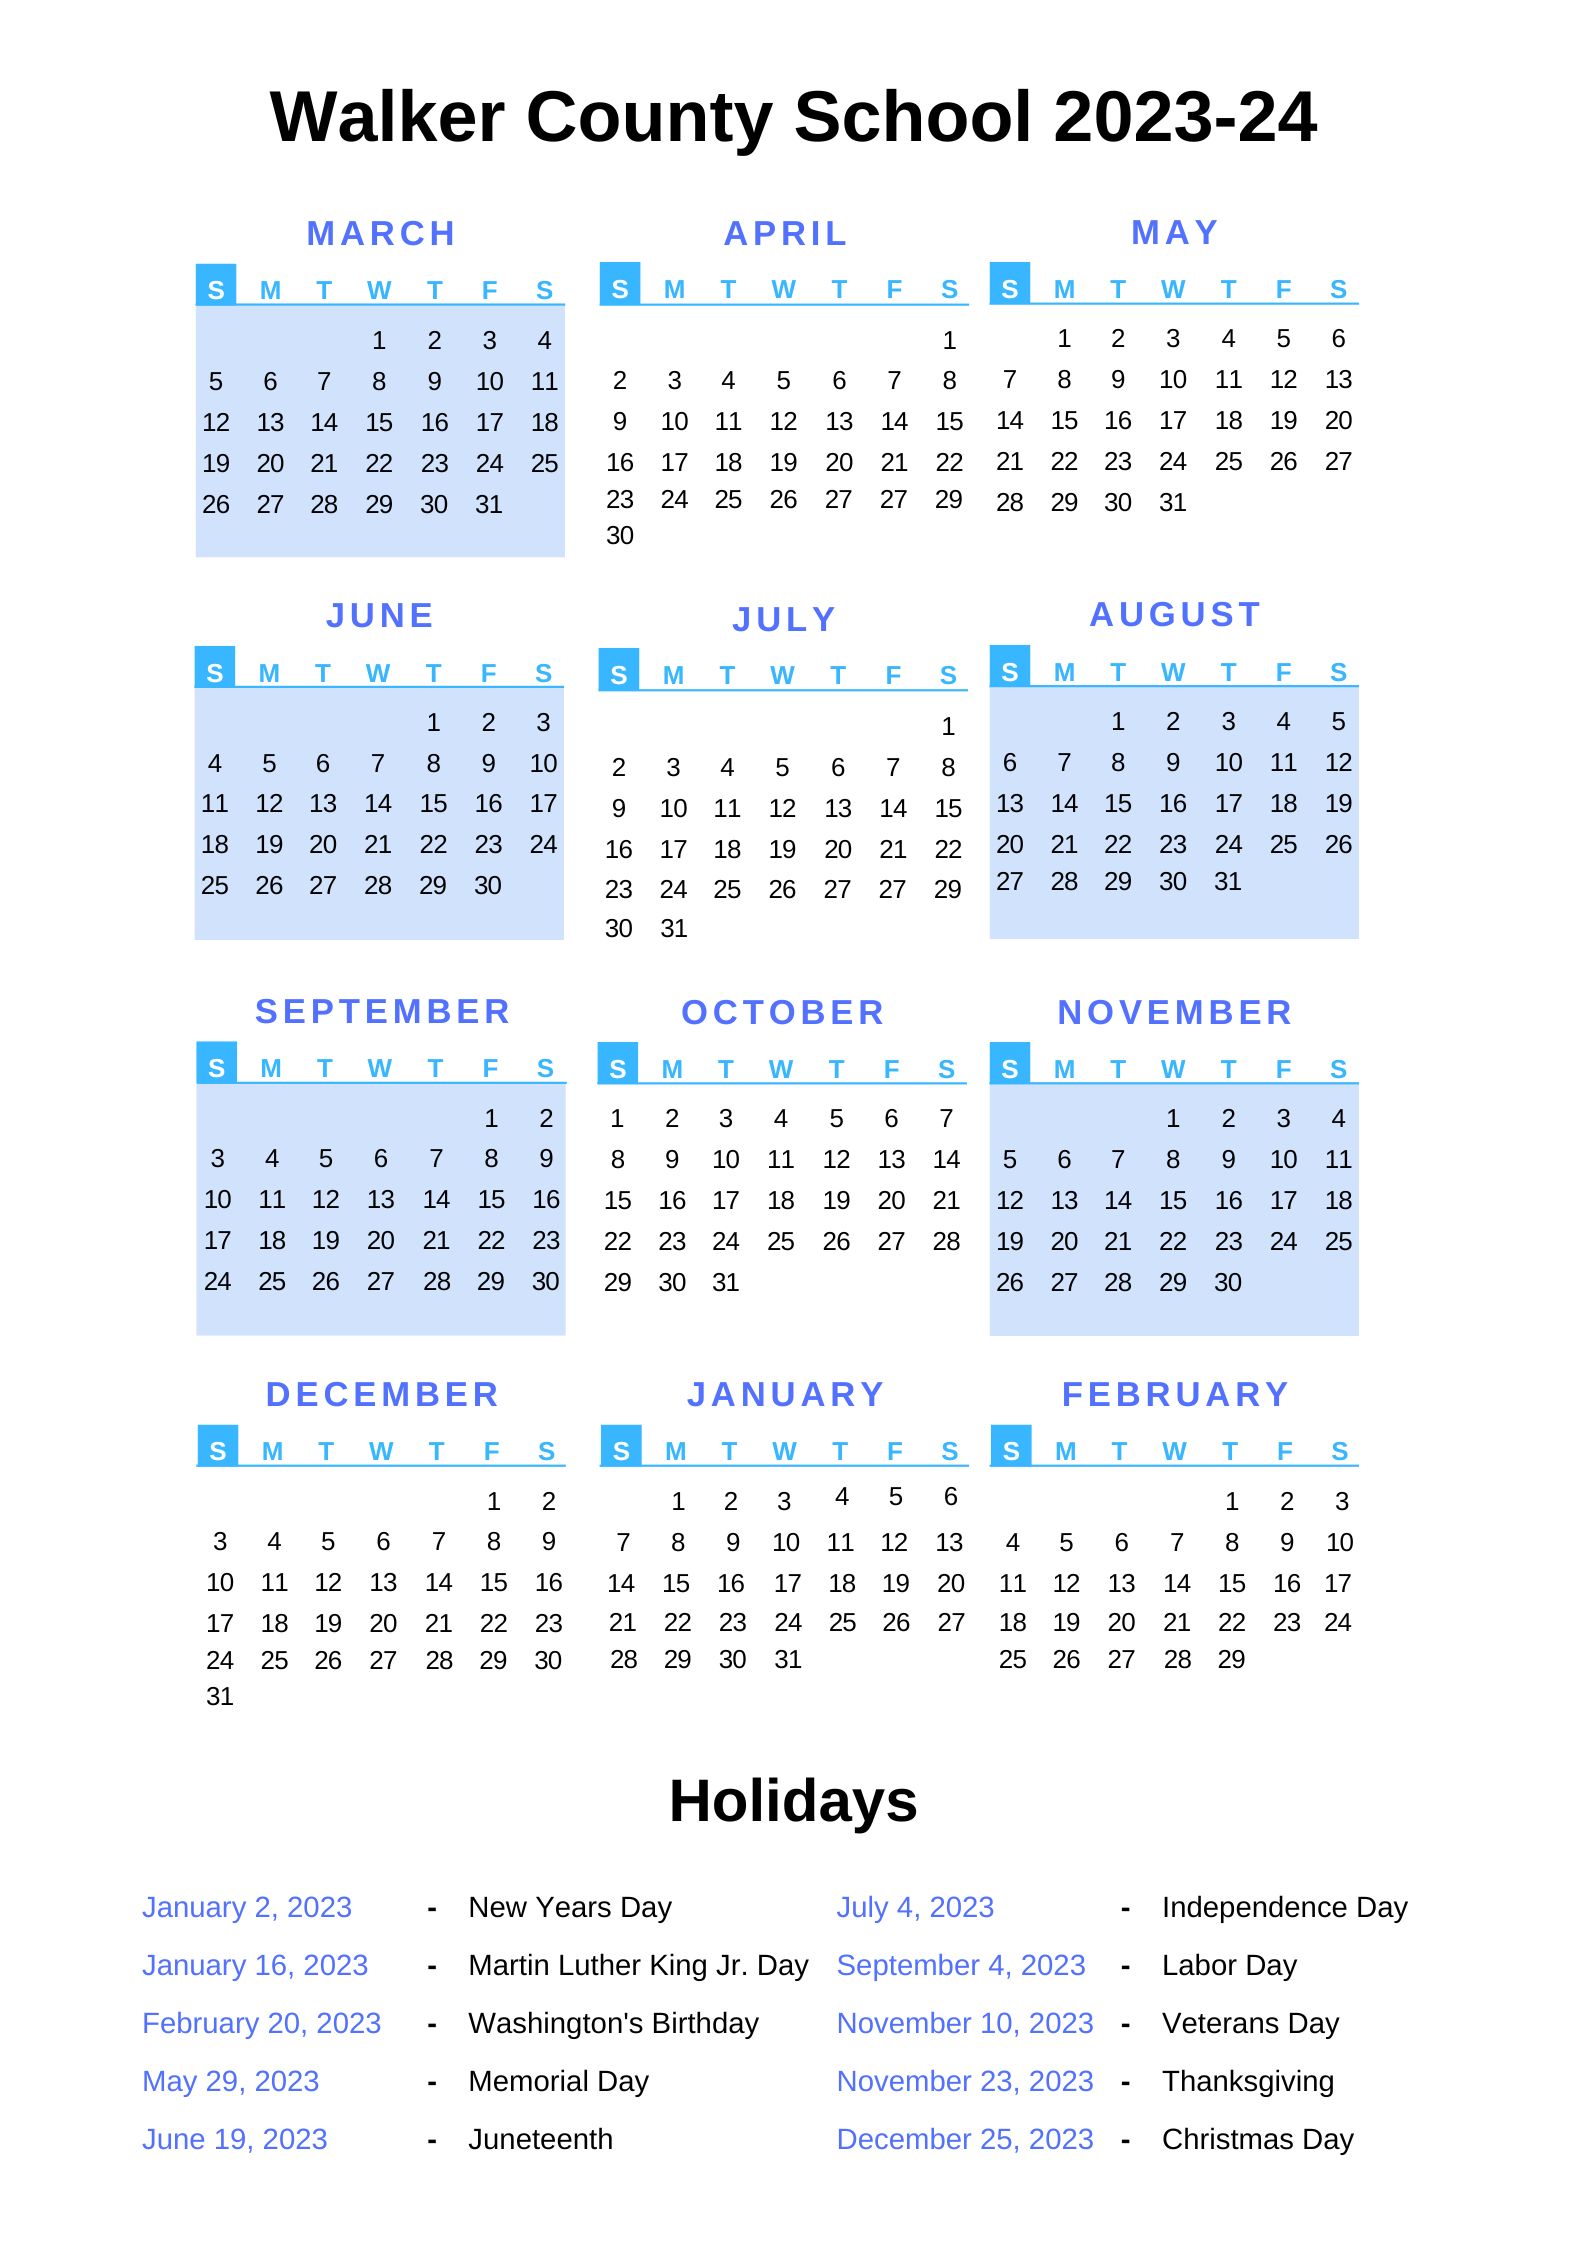 Walker County Schools Calendar 202324 with Holidays